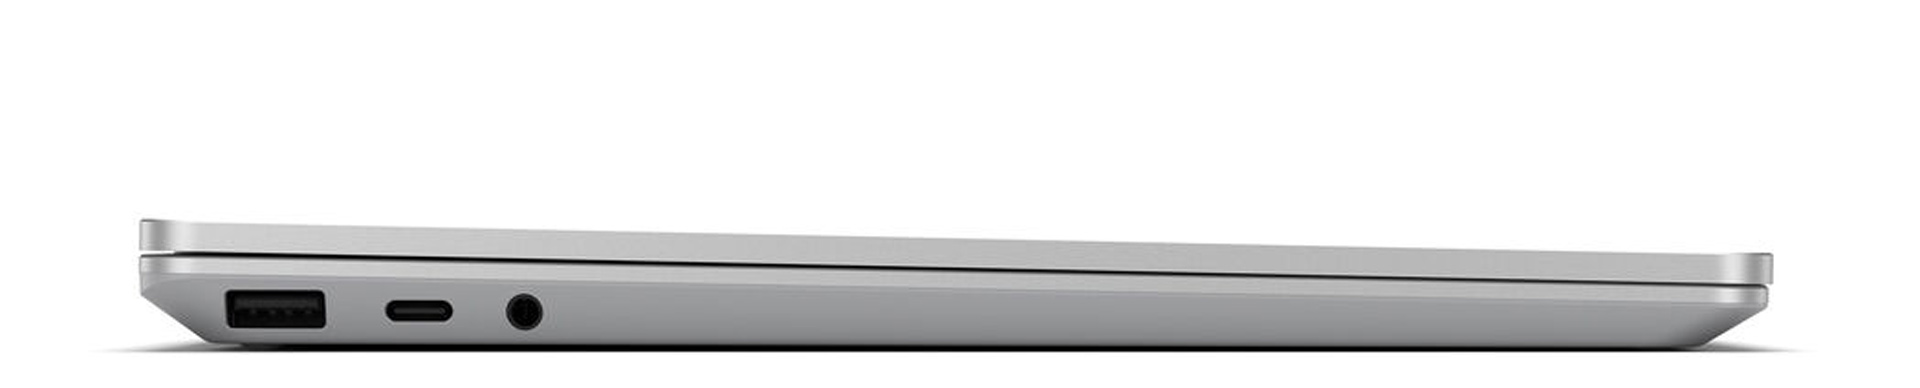 Surface Laptop Go2 Platinum - тонкий та стильний